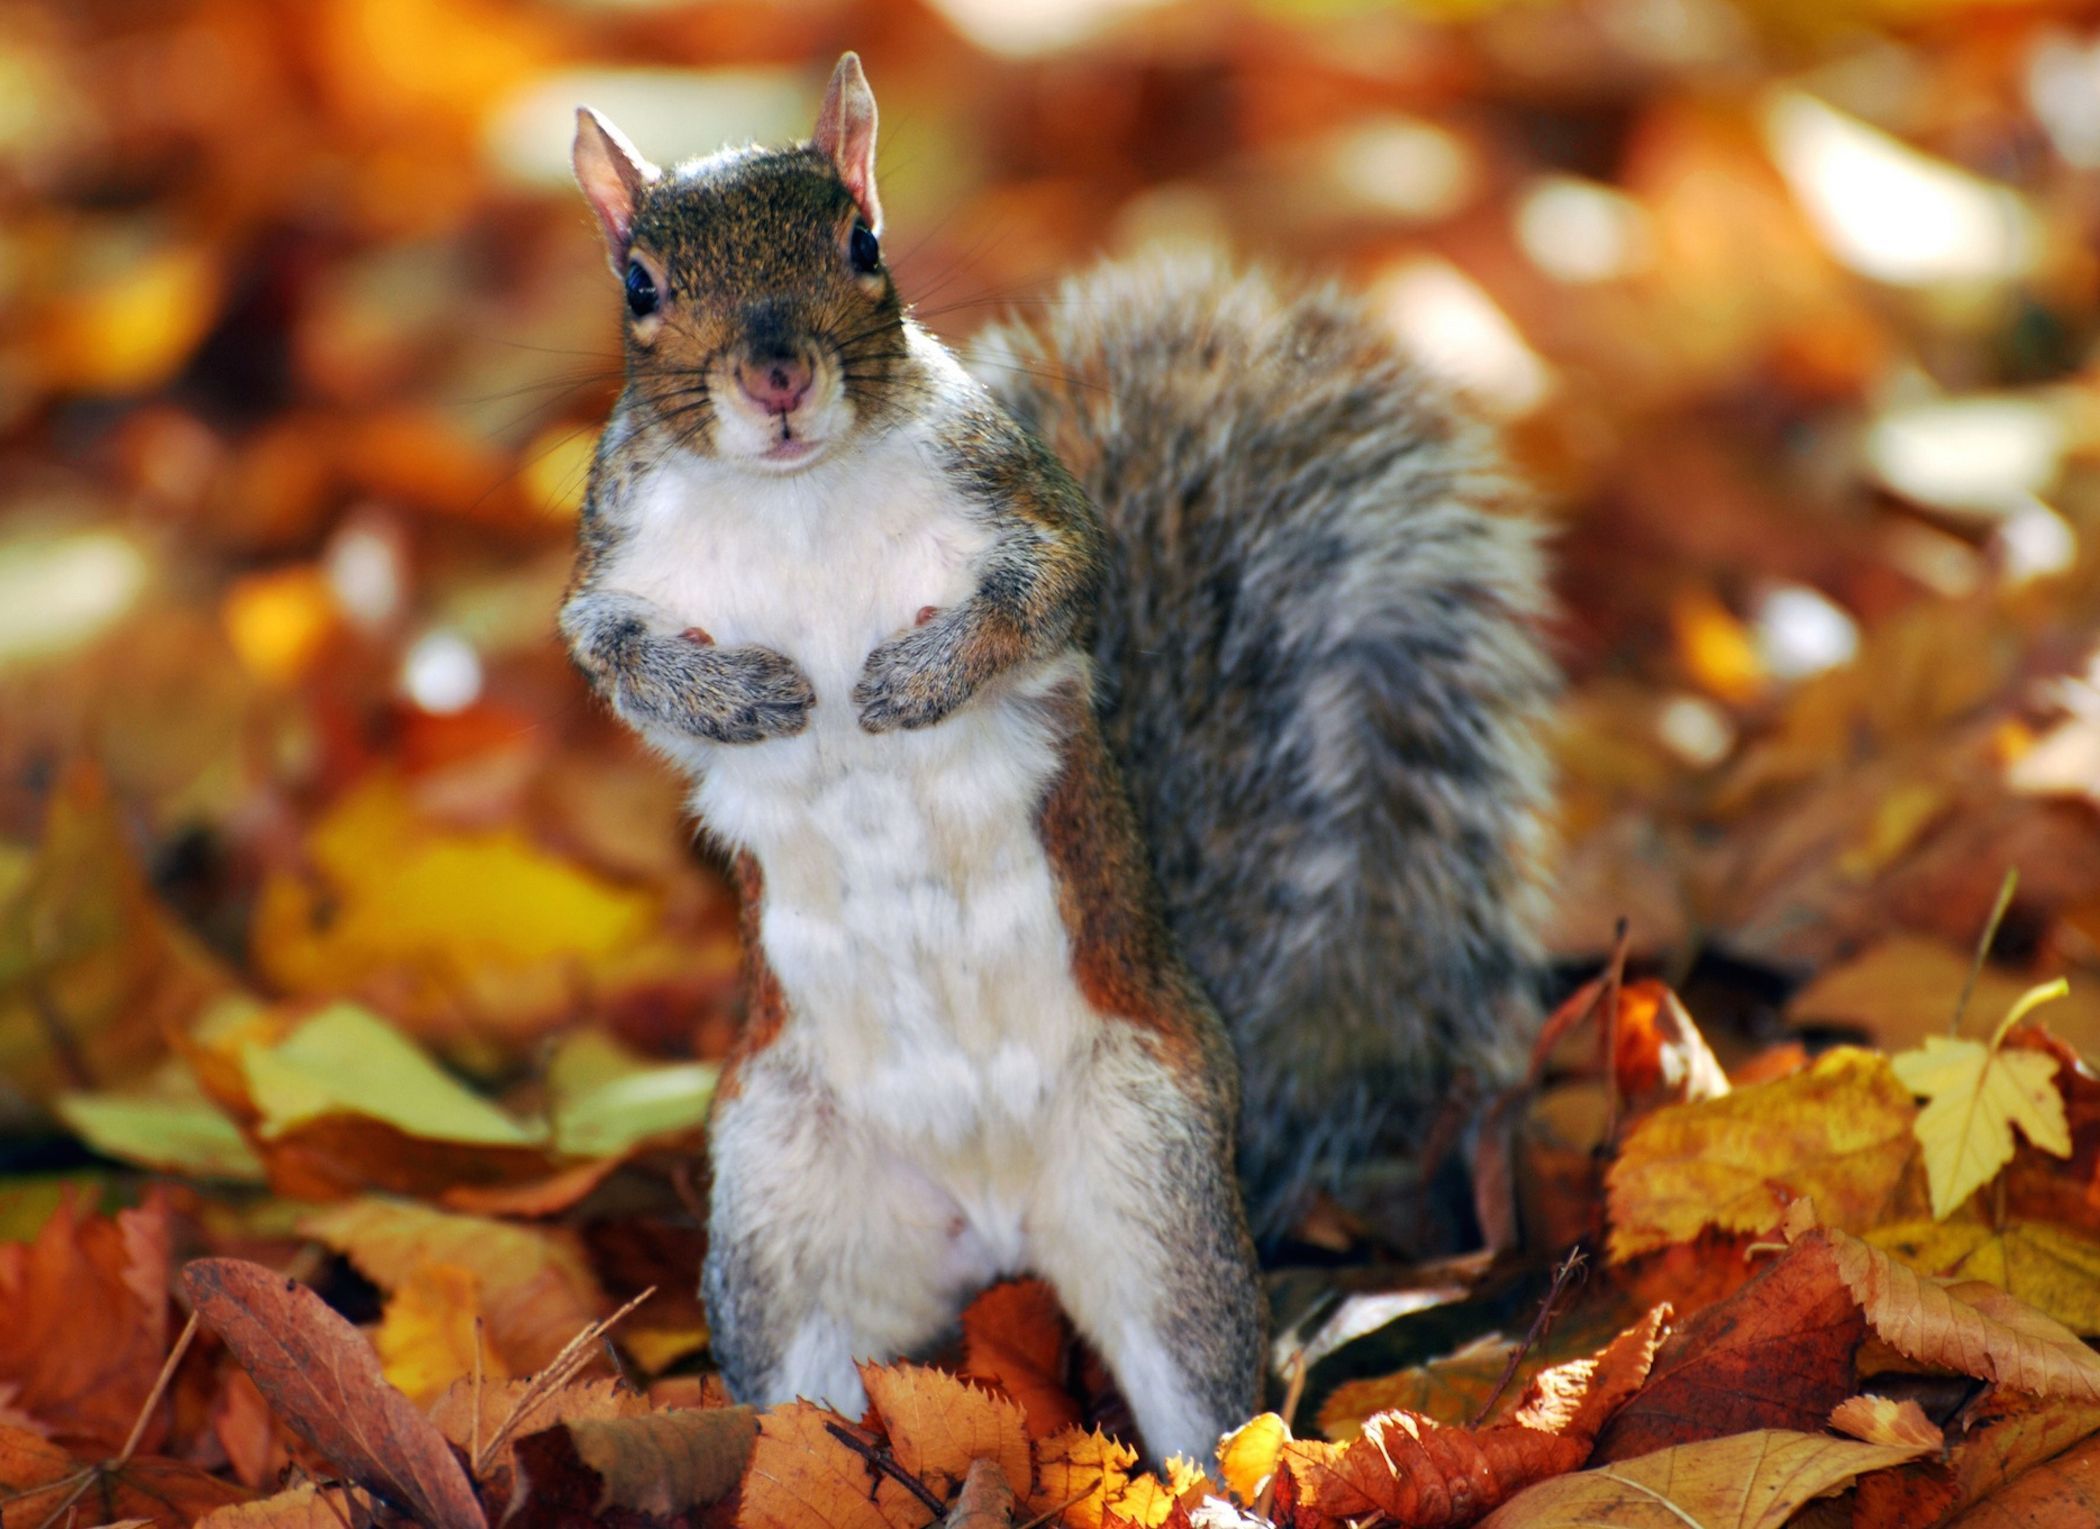 Autumn Squirrel Wallpaper. Animals, Autumn animals, Cute animals